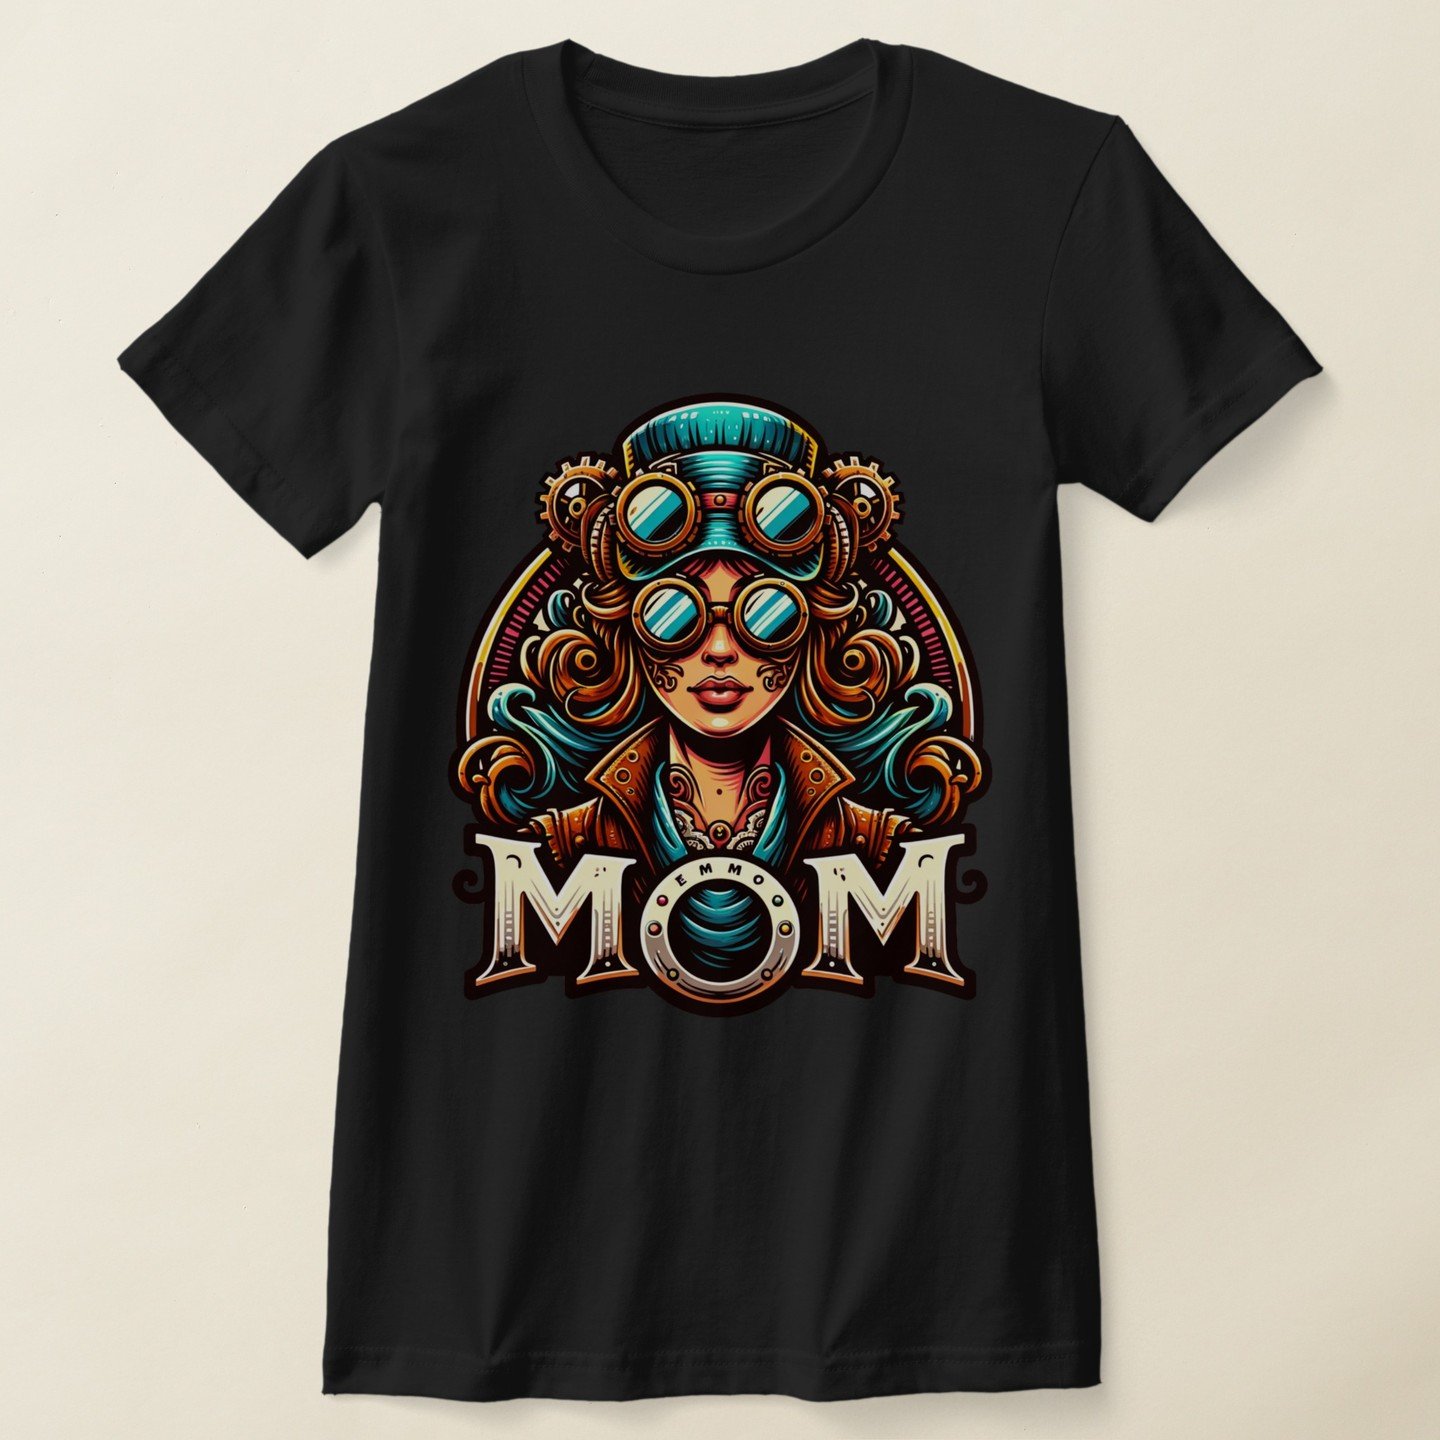 For the Steampunk Mom! #linkinbio
.
#zazzle #redbubble #teepublic #zazzlemade #shirt #stickers #mugs #mothersday #formom #steampunkmom #steampunk